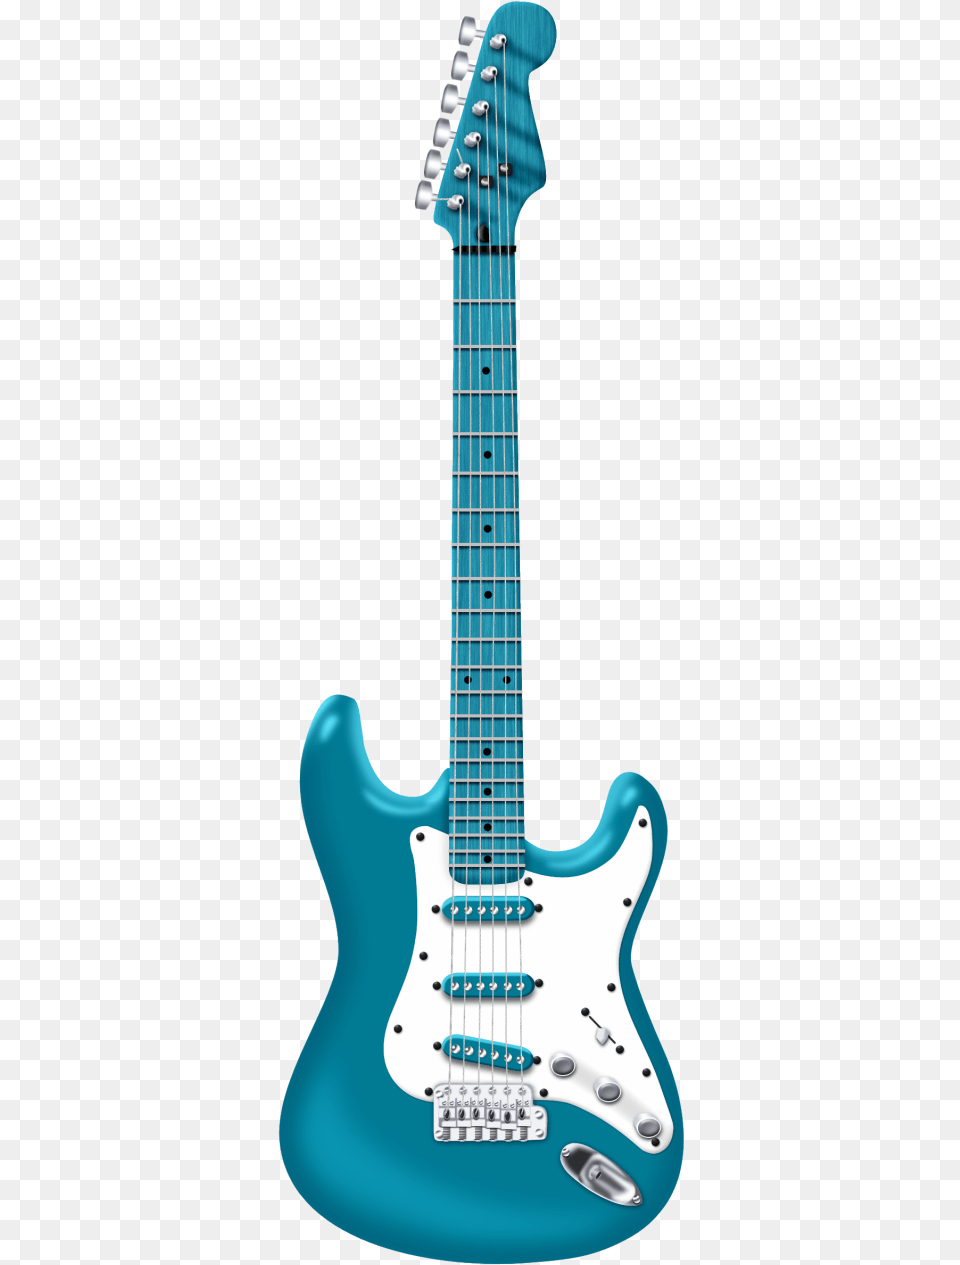 Electric Instruments Fender Strat Guitar Stratocaster, Electric Guitar, Musical Instrument, Bass Guitar Png